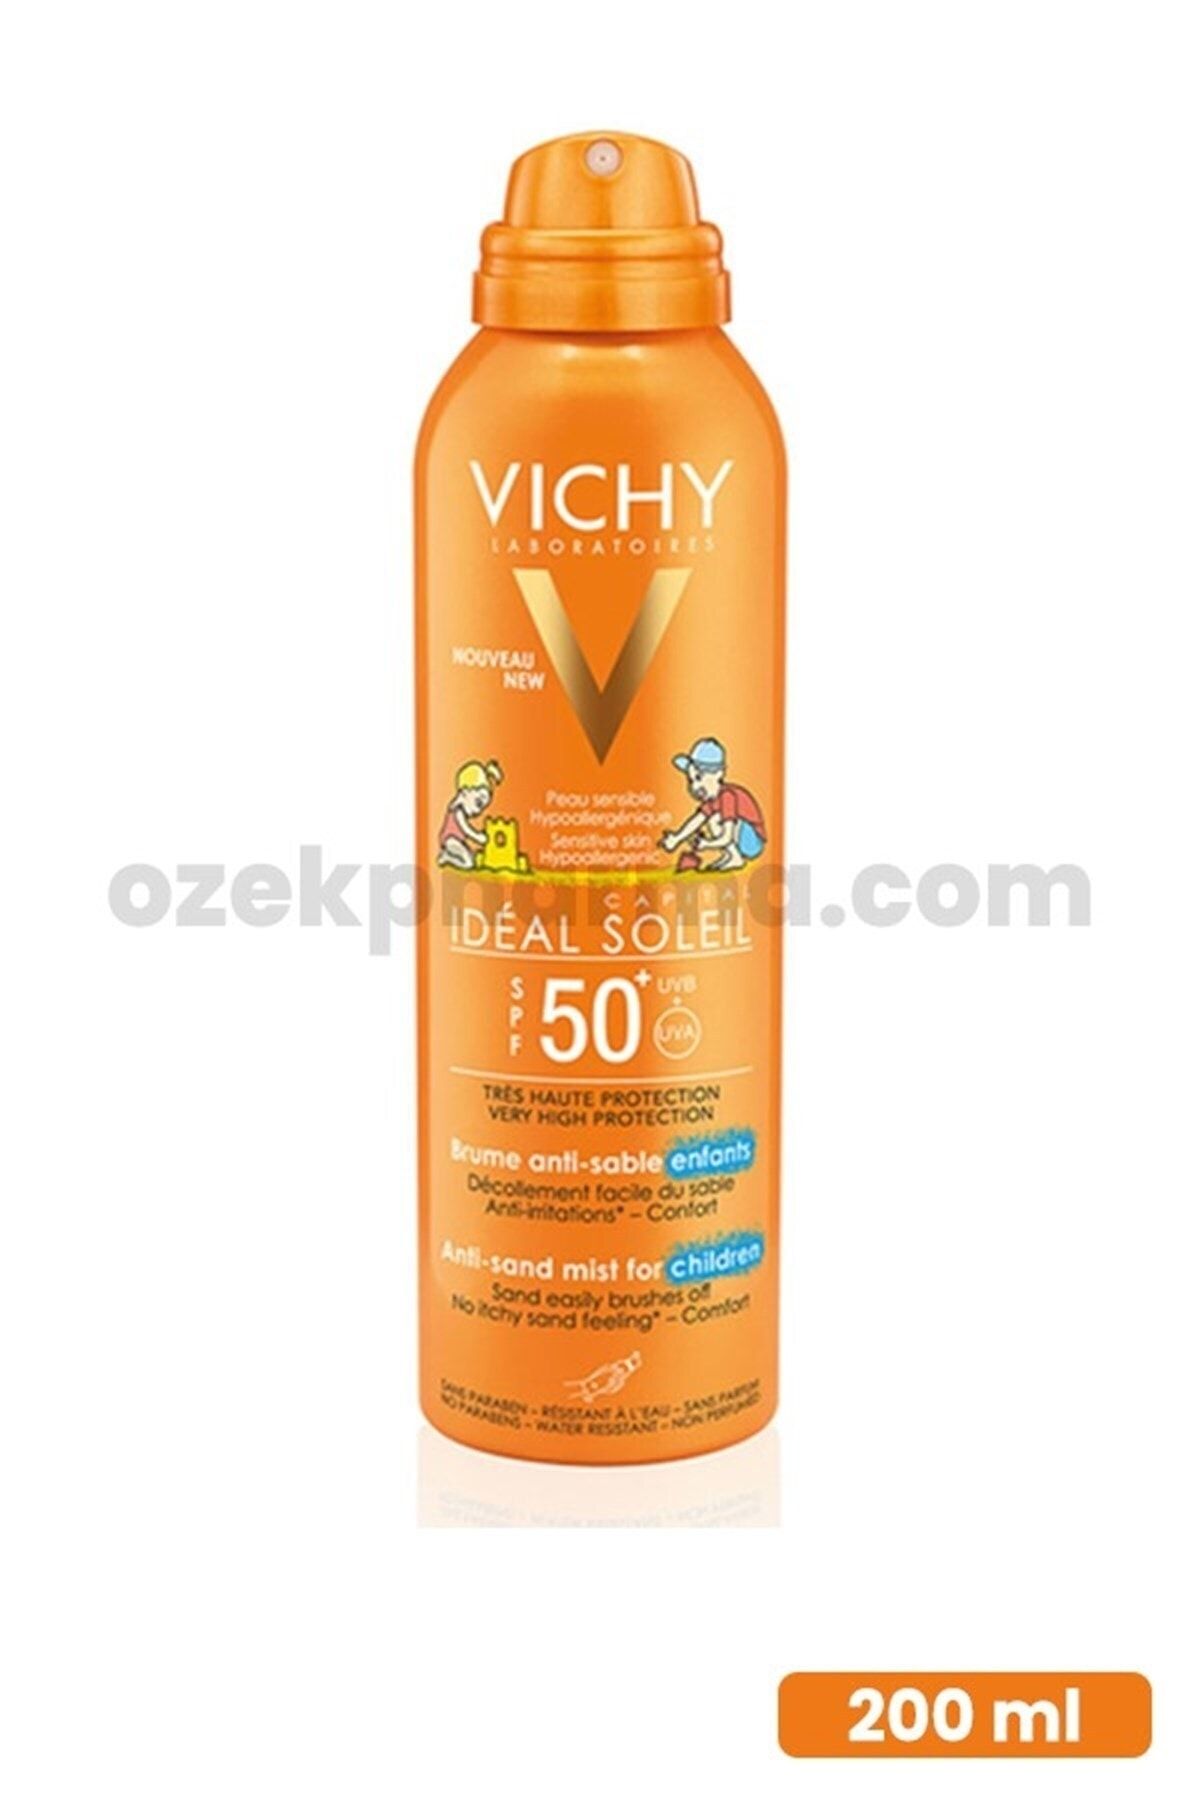 Vichy کرم ضدآفتاب کودک با فاکتور حفاظتی بالا SPF 50+ برای صورت و بدن 200 میلی لیتر